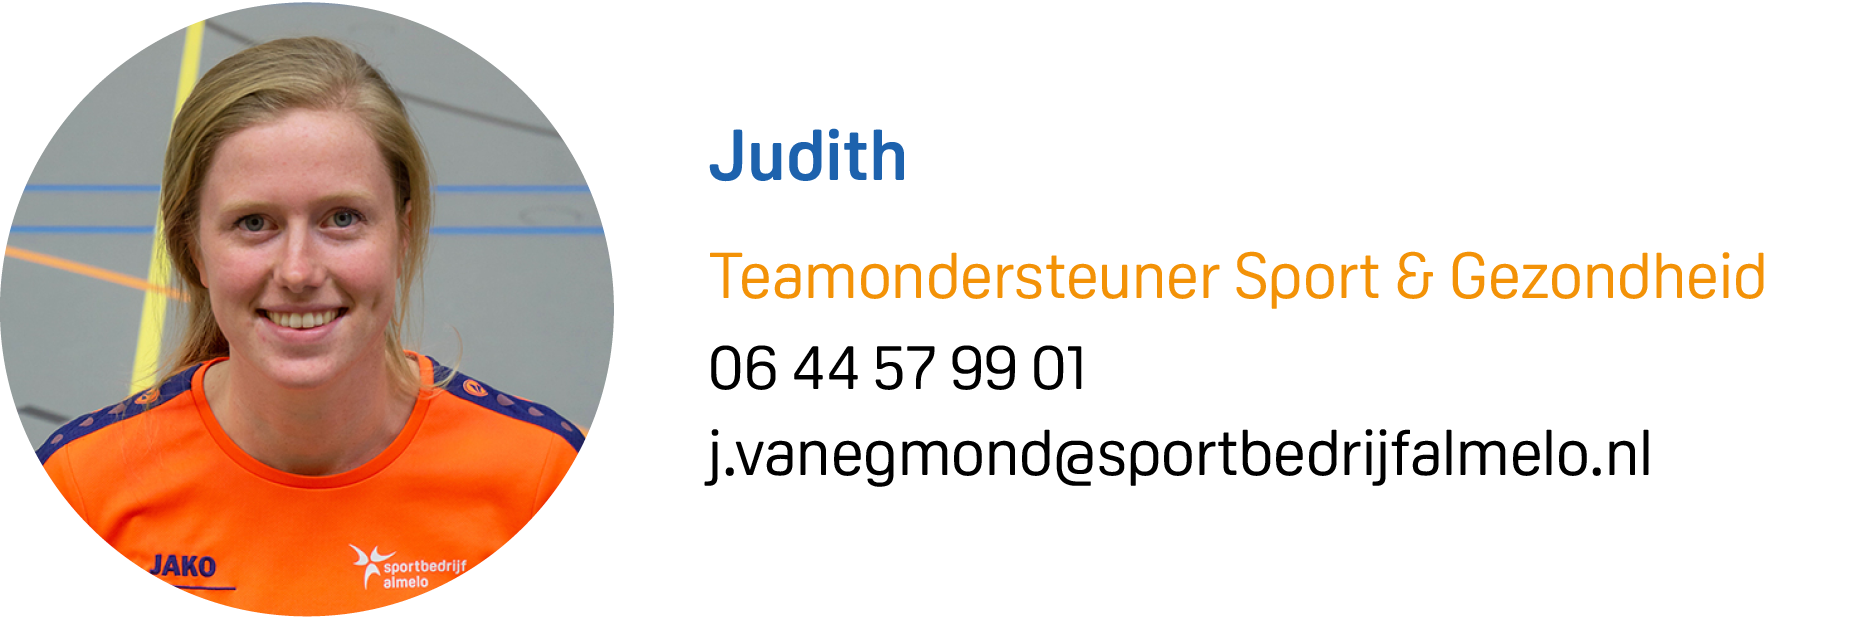 Judith HR2.png